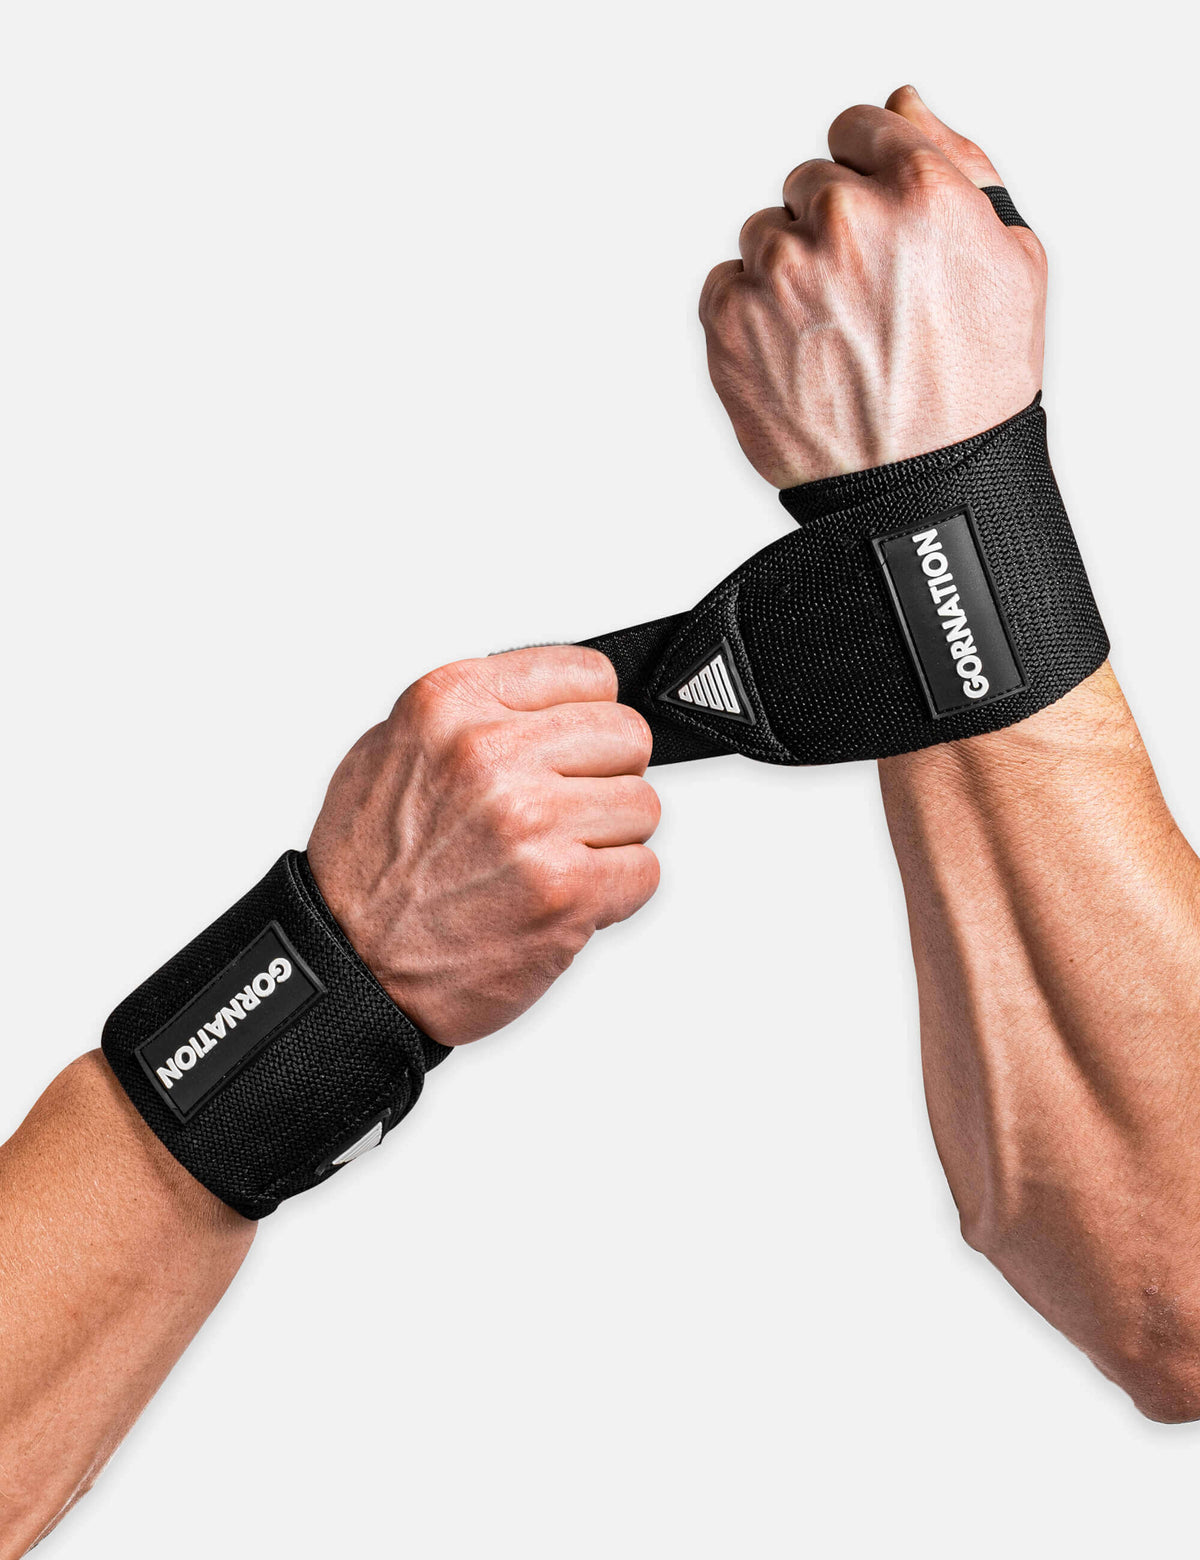 Black power wrist wraps to improve stability and get more power moves. To improve stability and injury prevention.